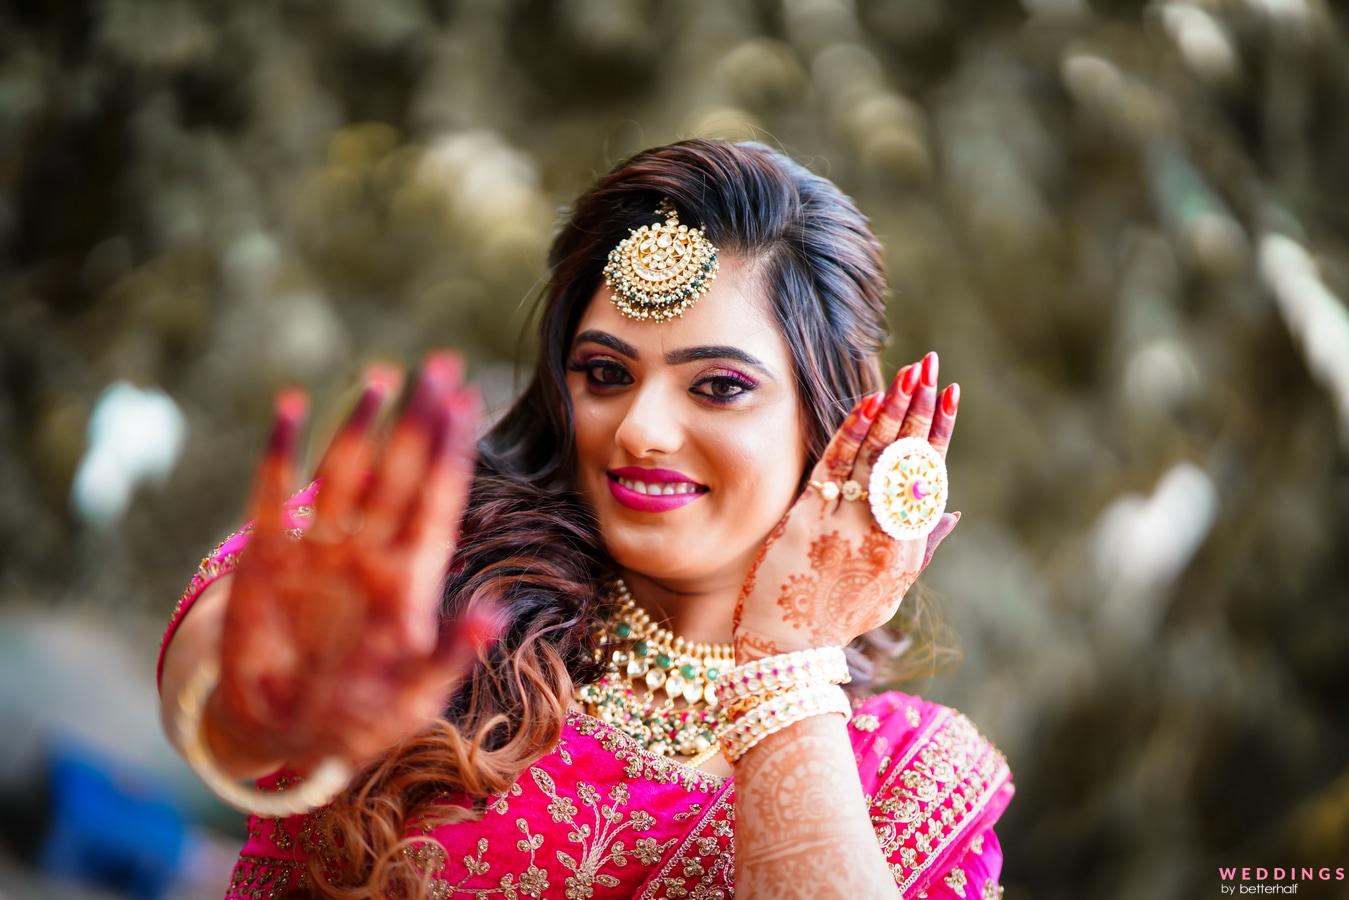 PRIYADARSHIKA STUDIO on LinkedIn: #bride #weddingphotography #weddingdress  #weddingday #weddinginspiration…